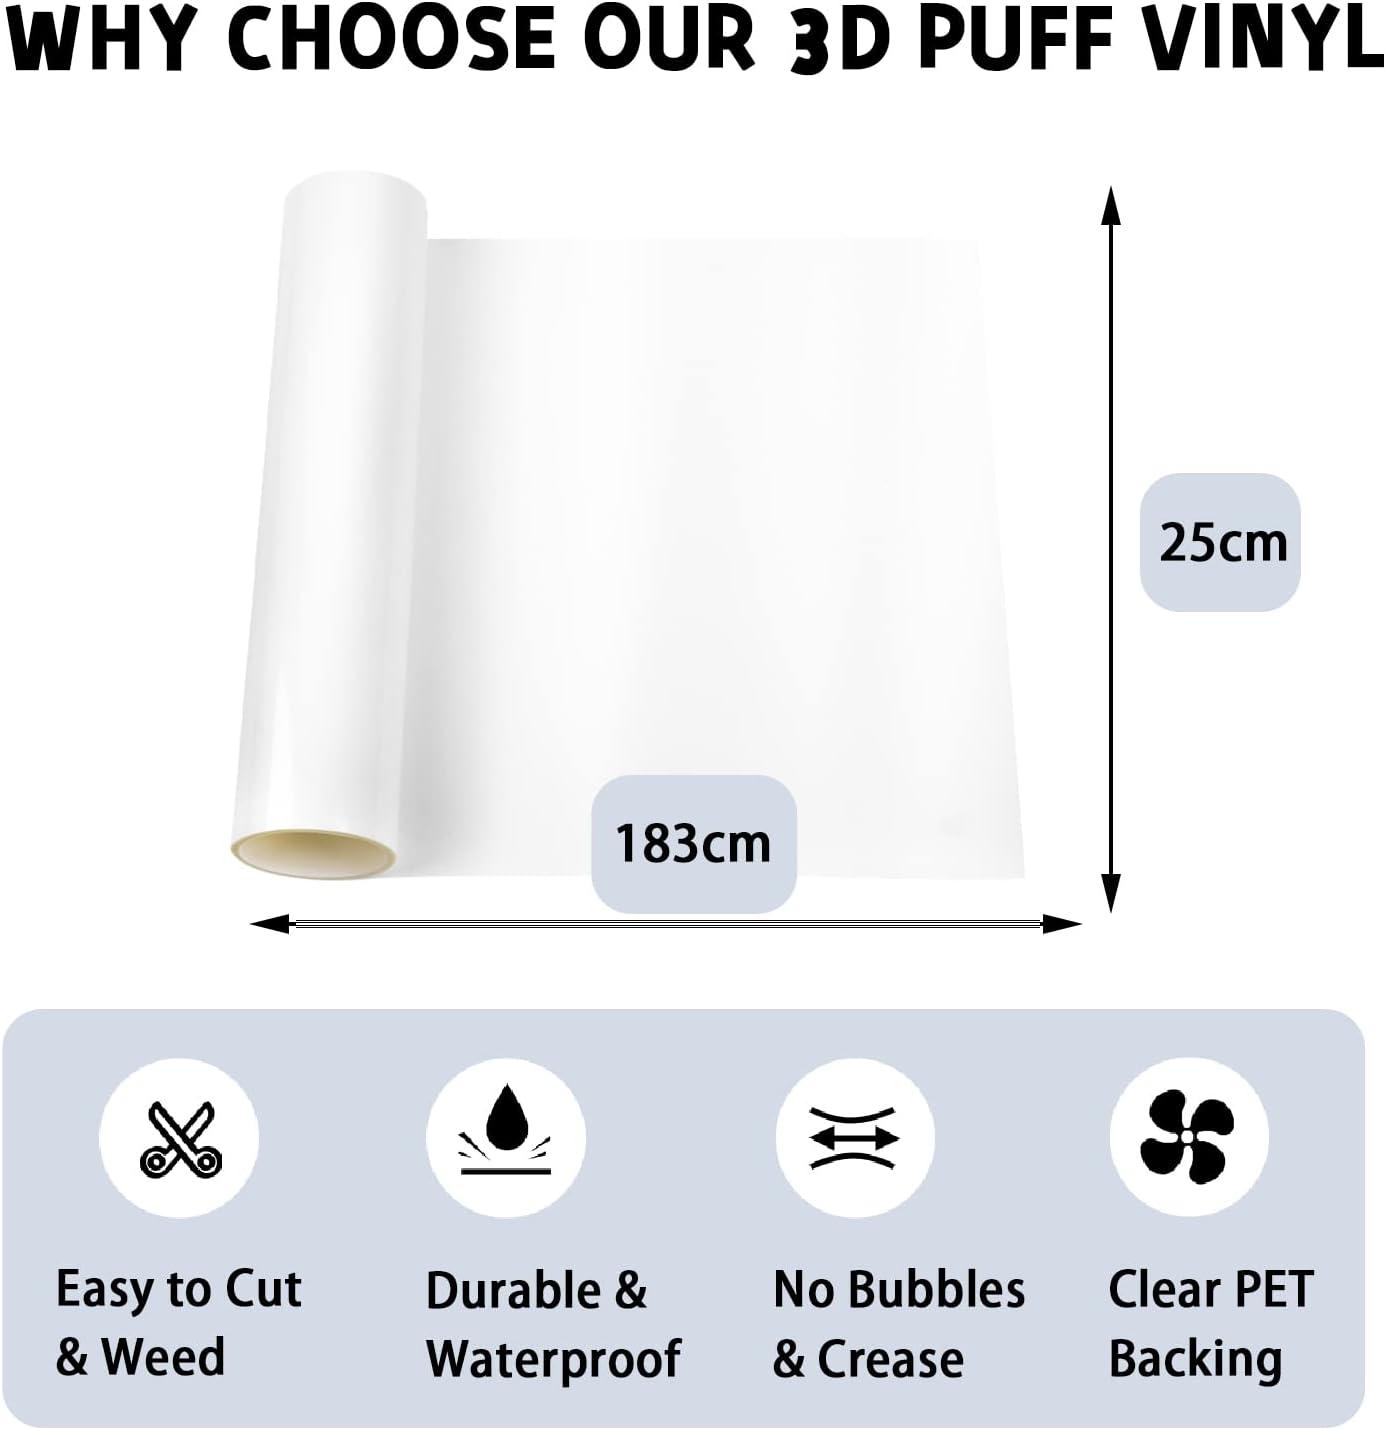 3D Puff Heat Transfer Fashion Vinyl Large Sheet and Rolls 